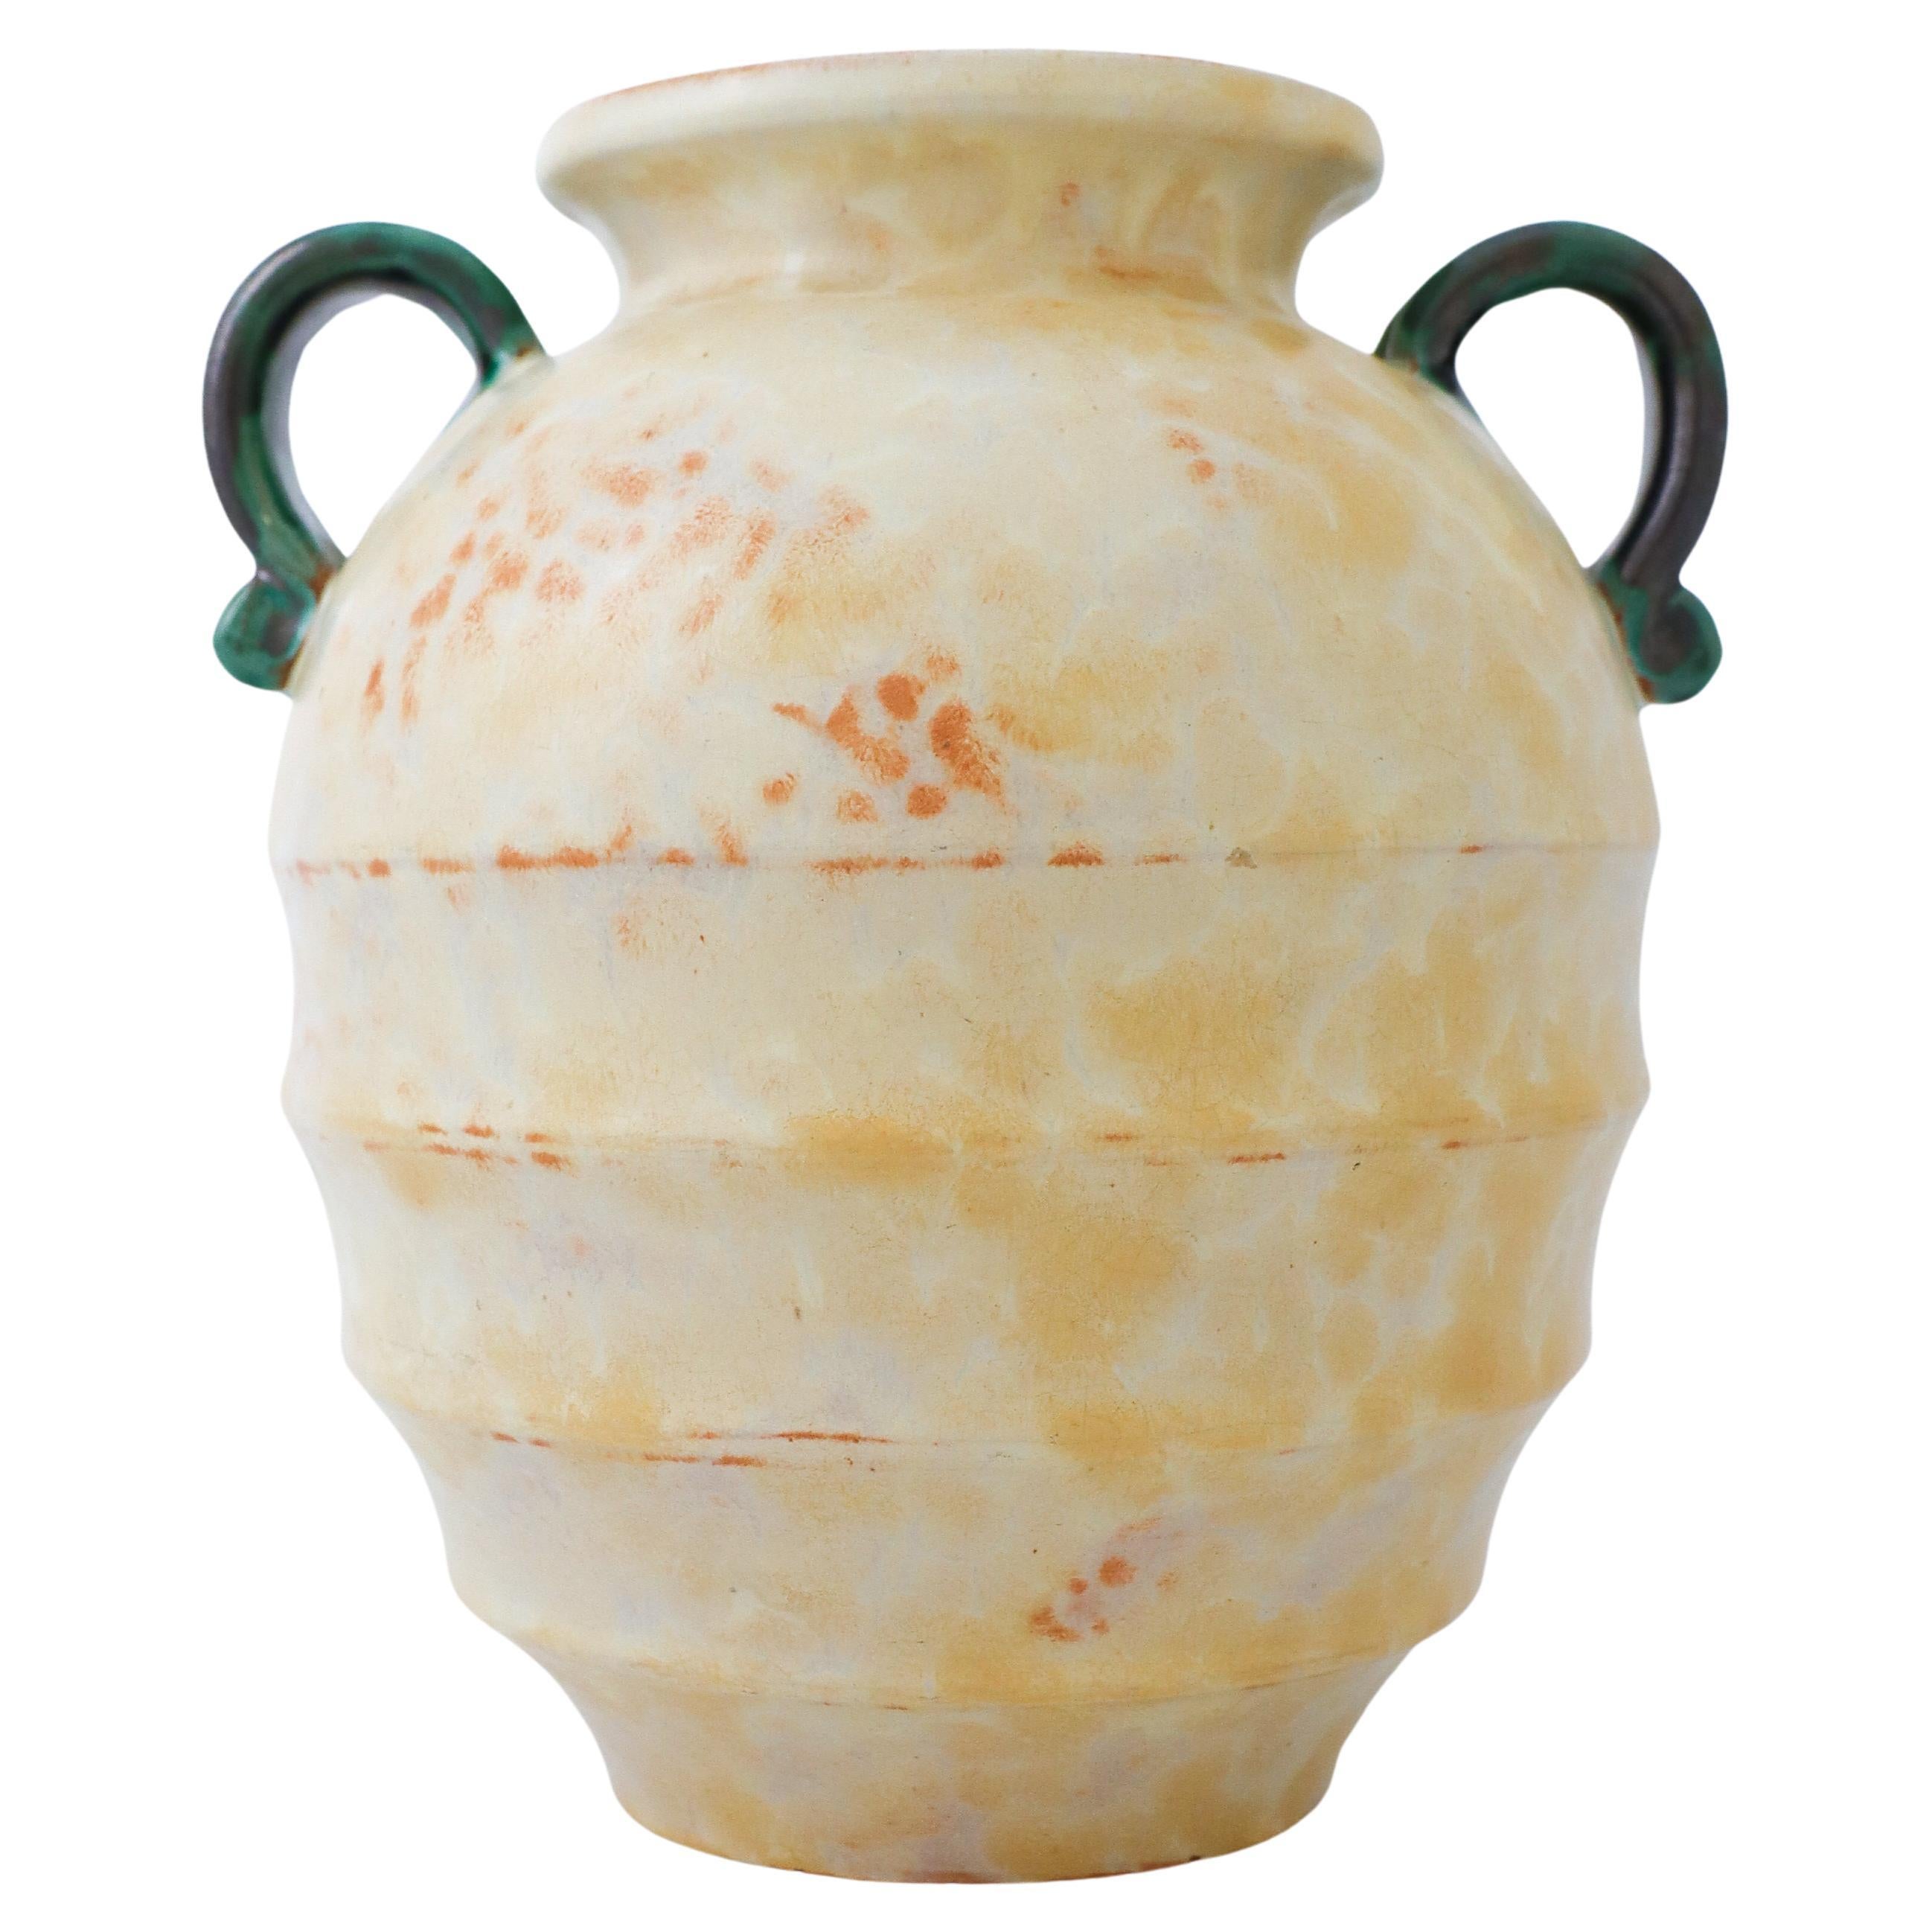 Ravissant vase Art Déco jaune - Upsala Ekeby, Suède, années 1930, style urne romaine